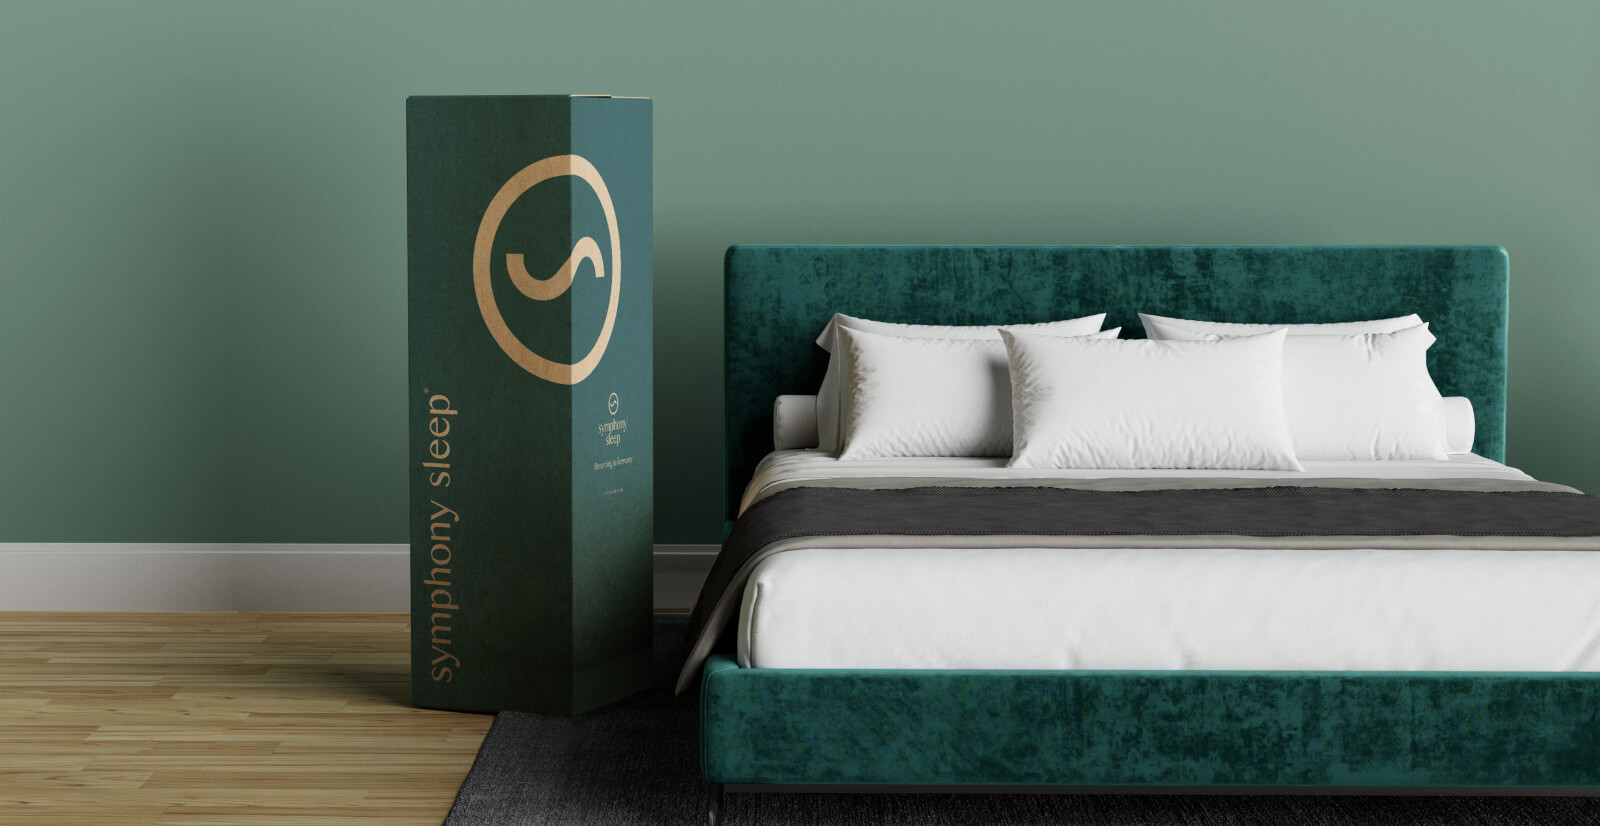 DD.NYC® designed brand identity and packaging for Symphony Sleep - Innovative Sleep Technologies